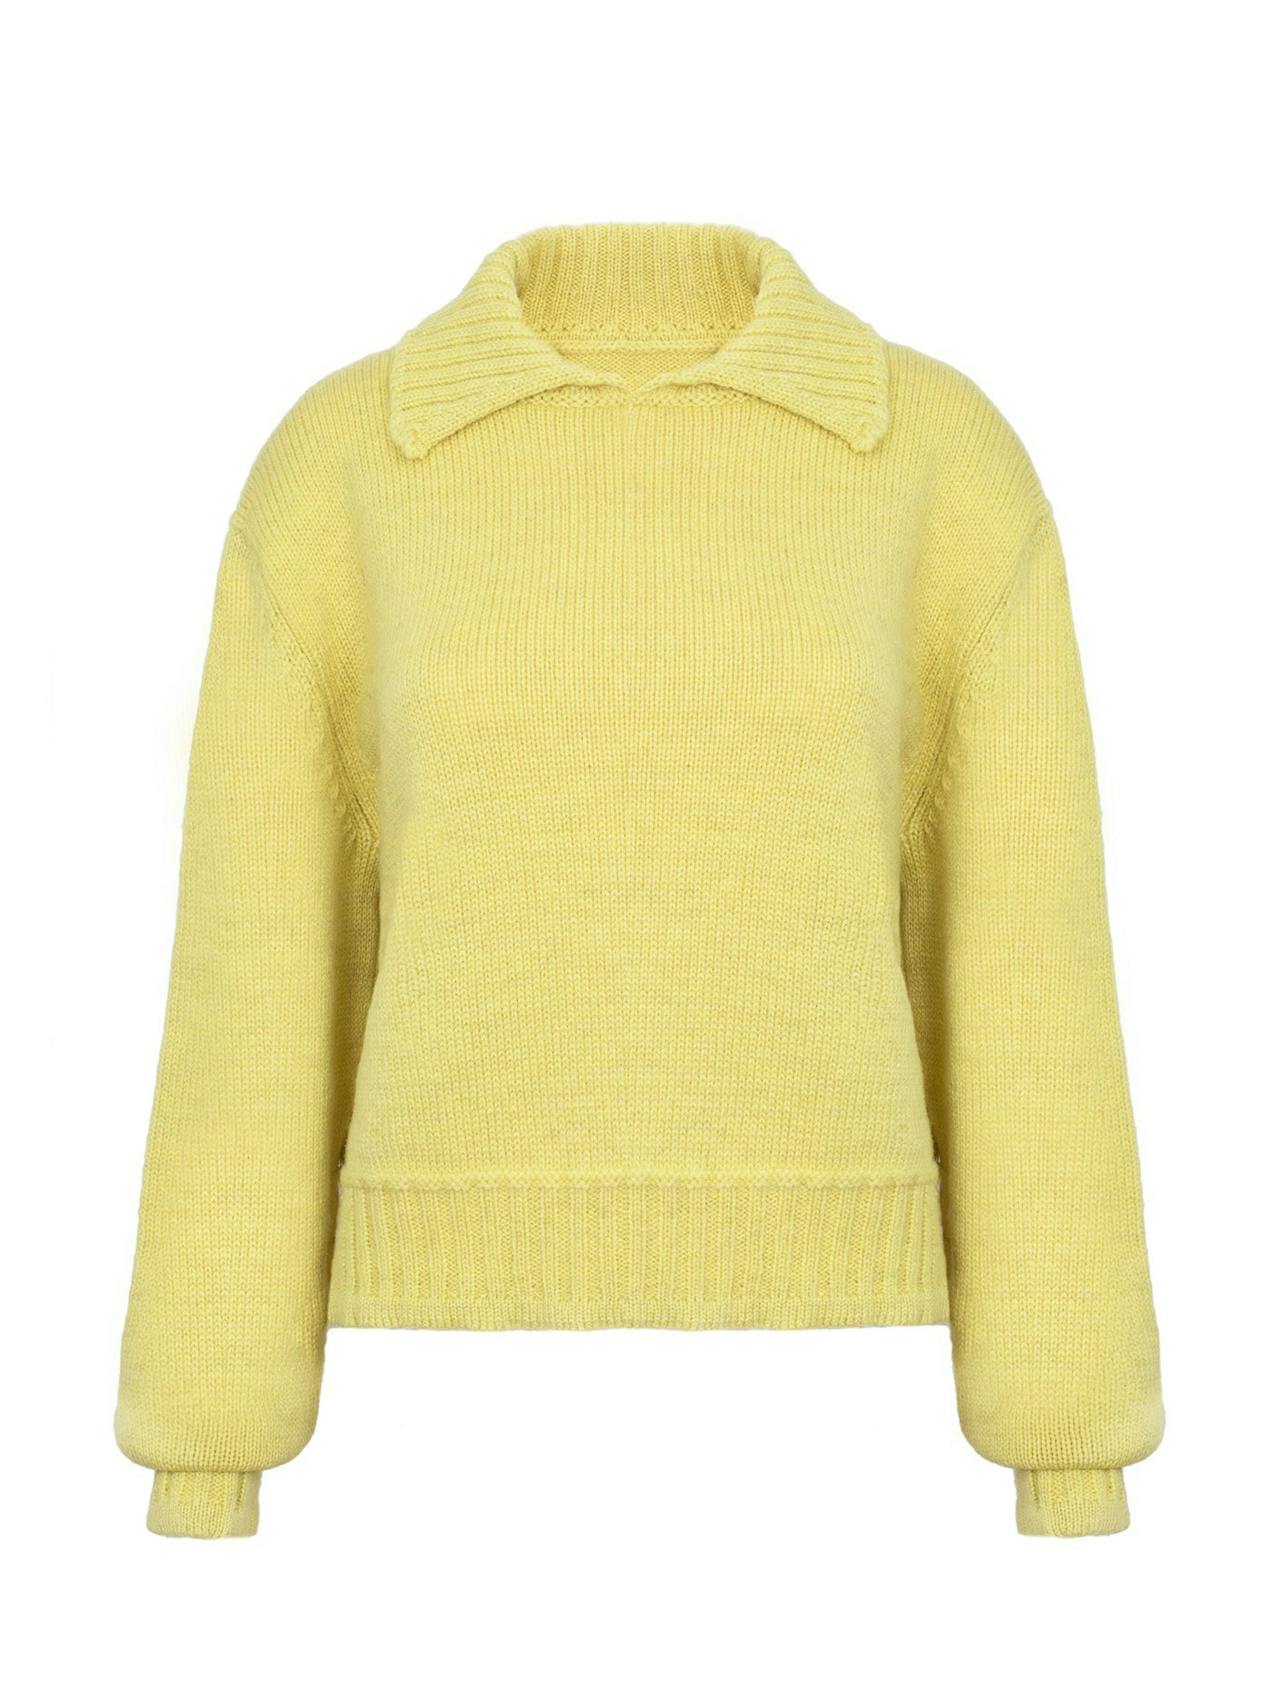 Lemon wool Ingleton jumper